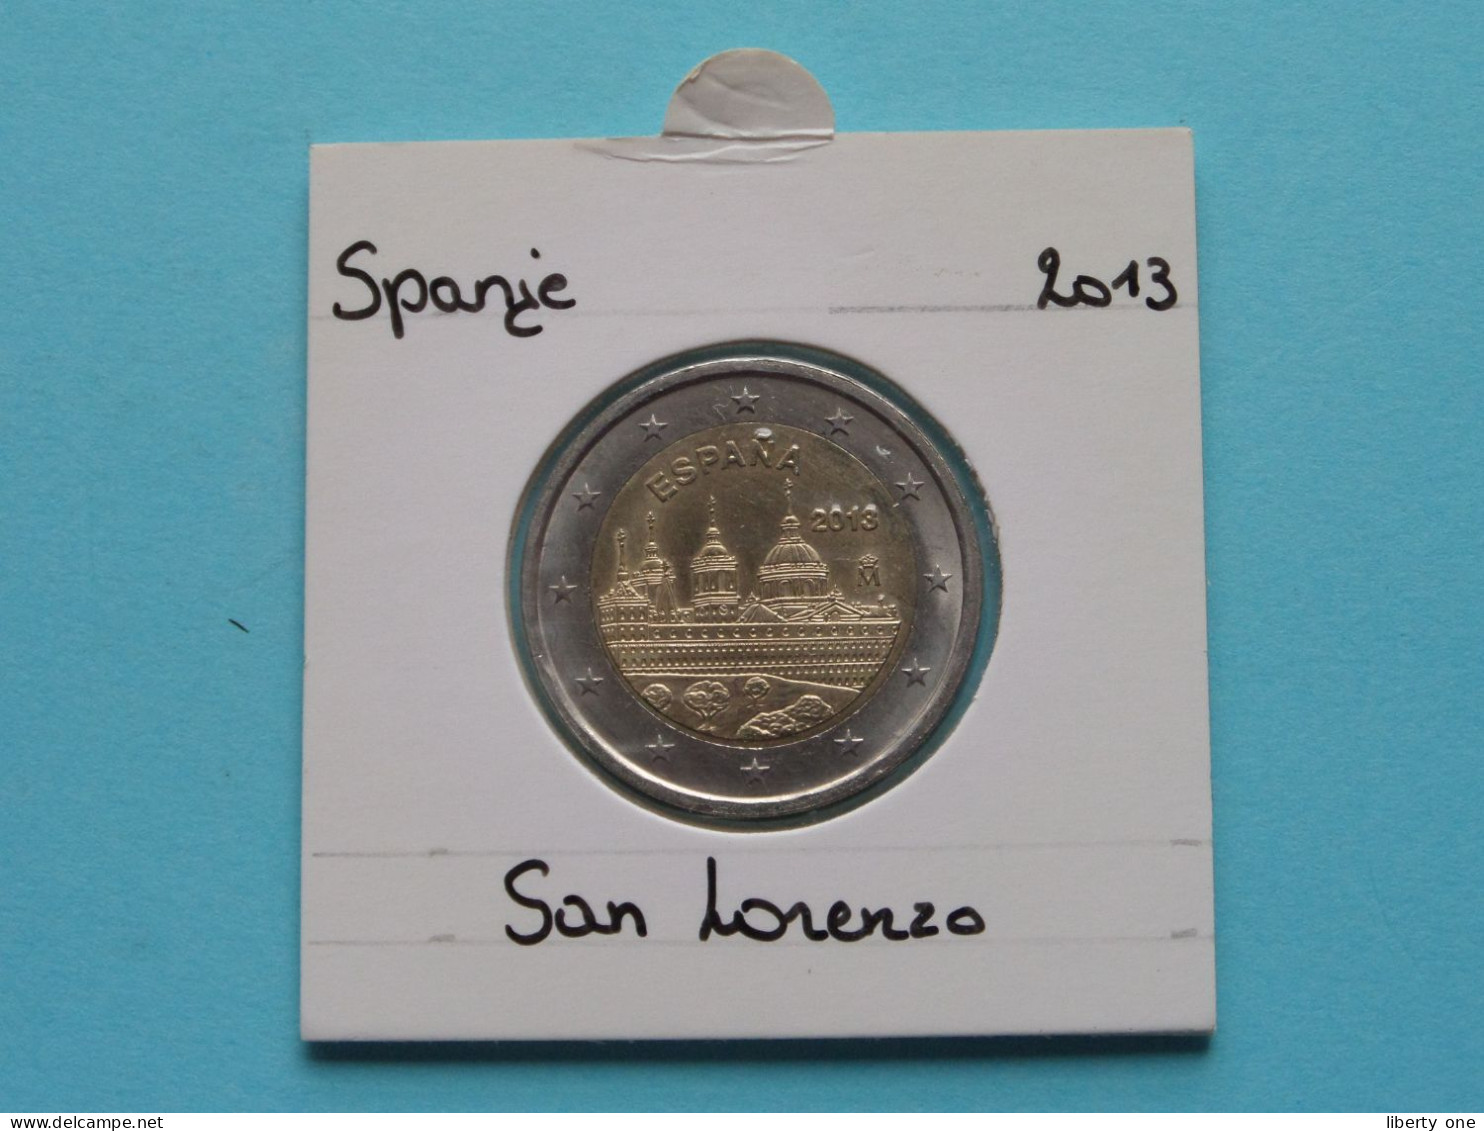 2013 - 2 Euro > SAN LORENZO ( Zie/voir SCANS Voor Detail ) ESPANA - Spain / Spanje ! - Espagne